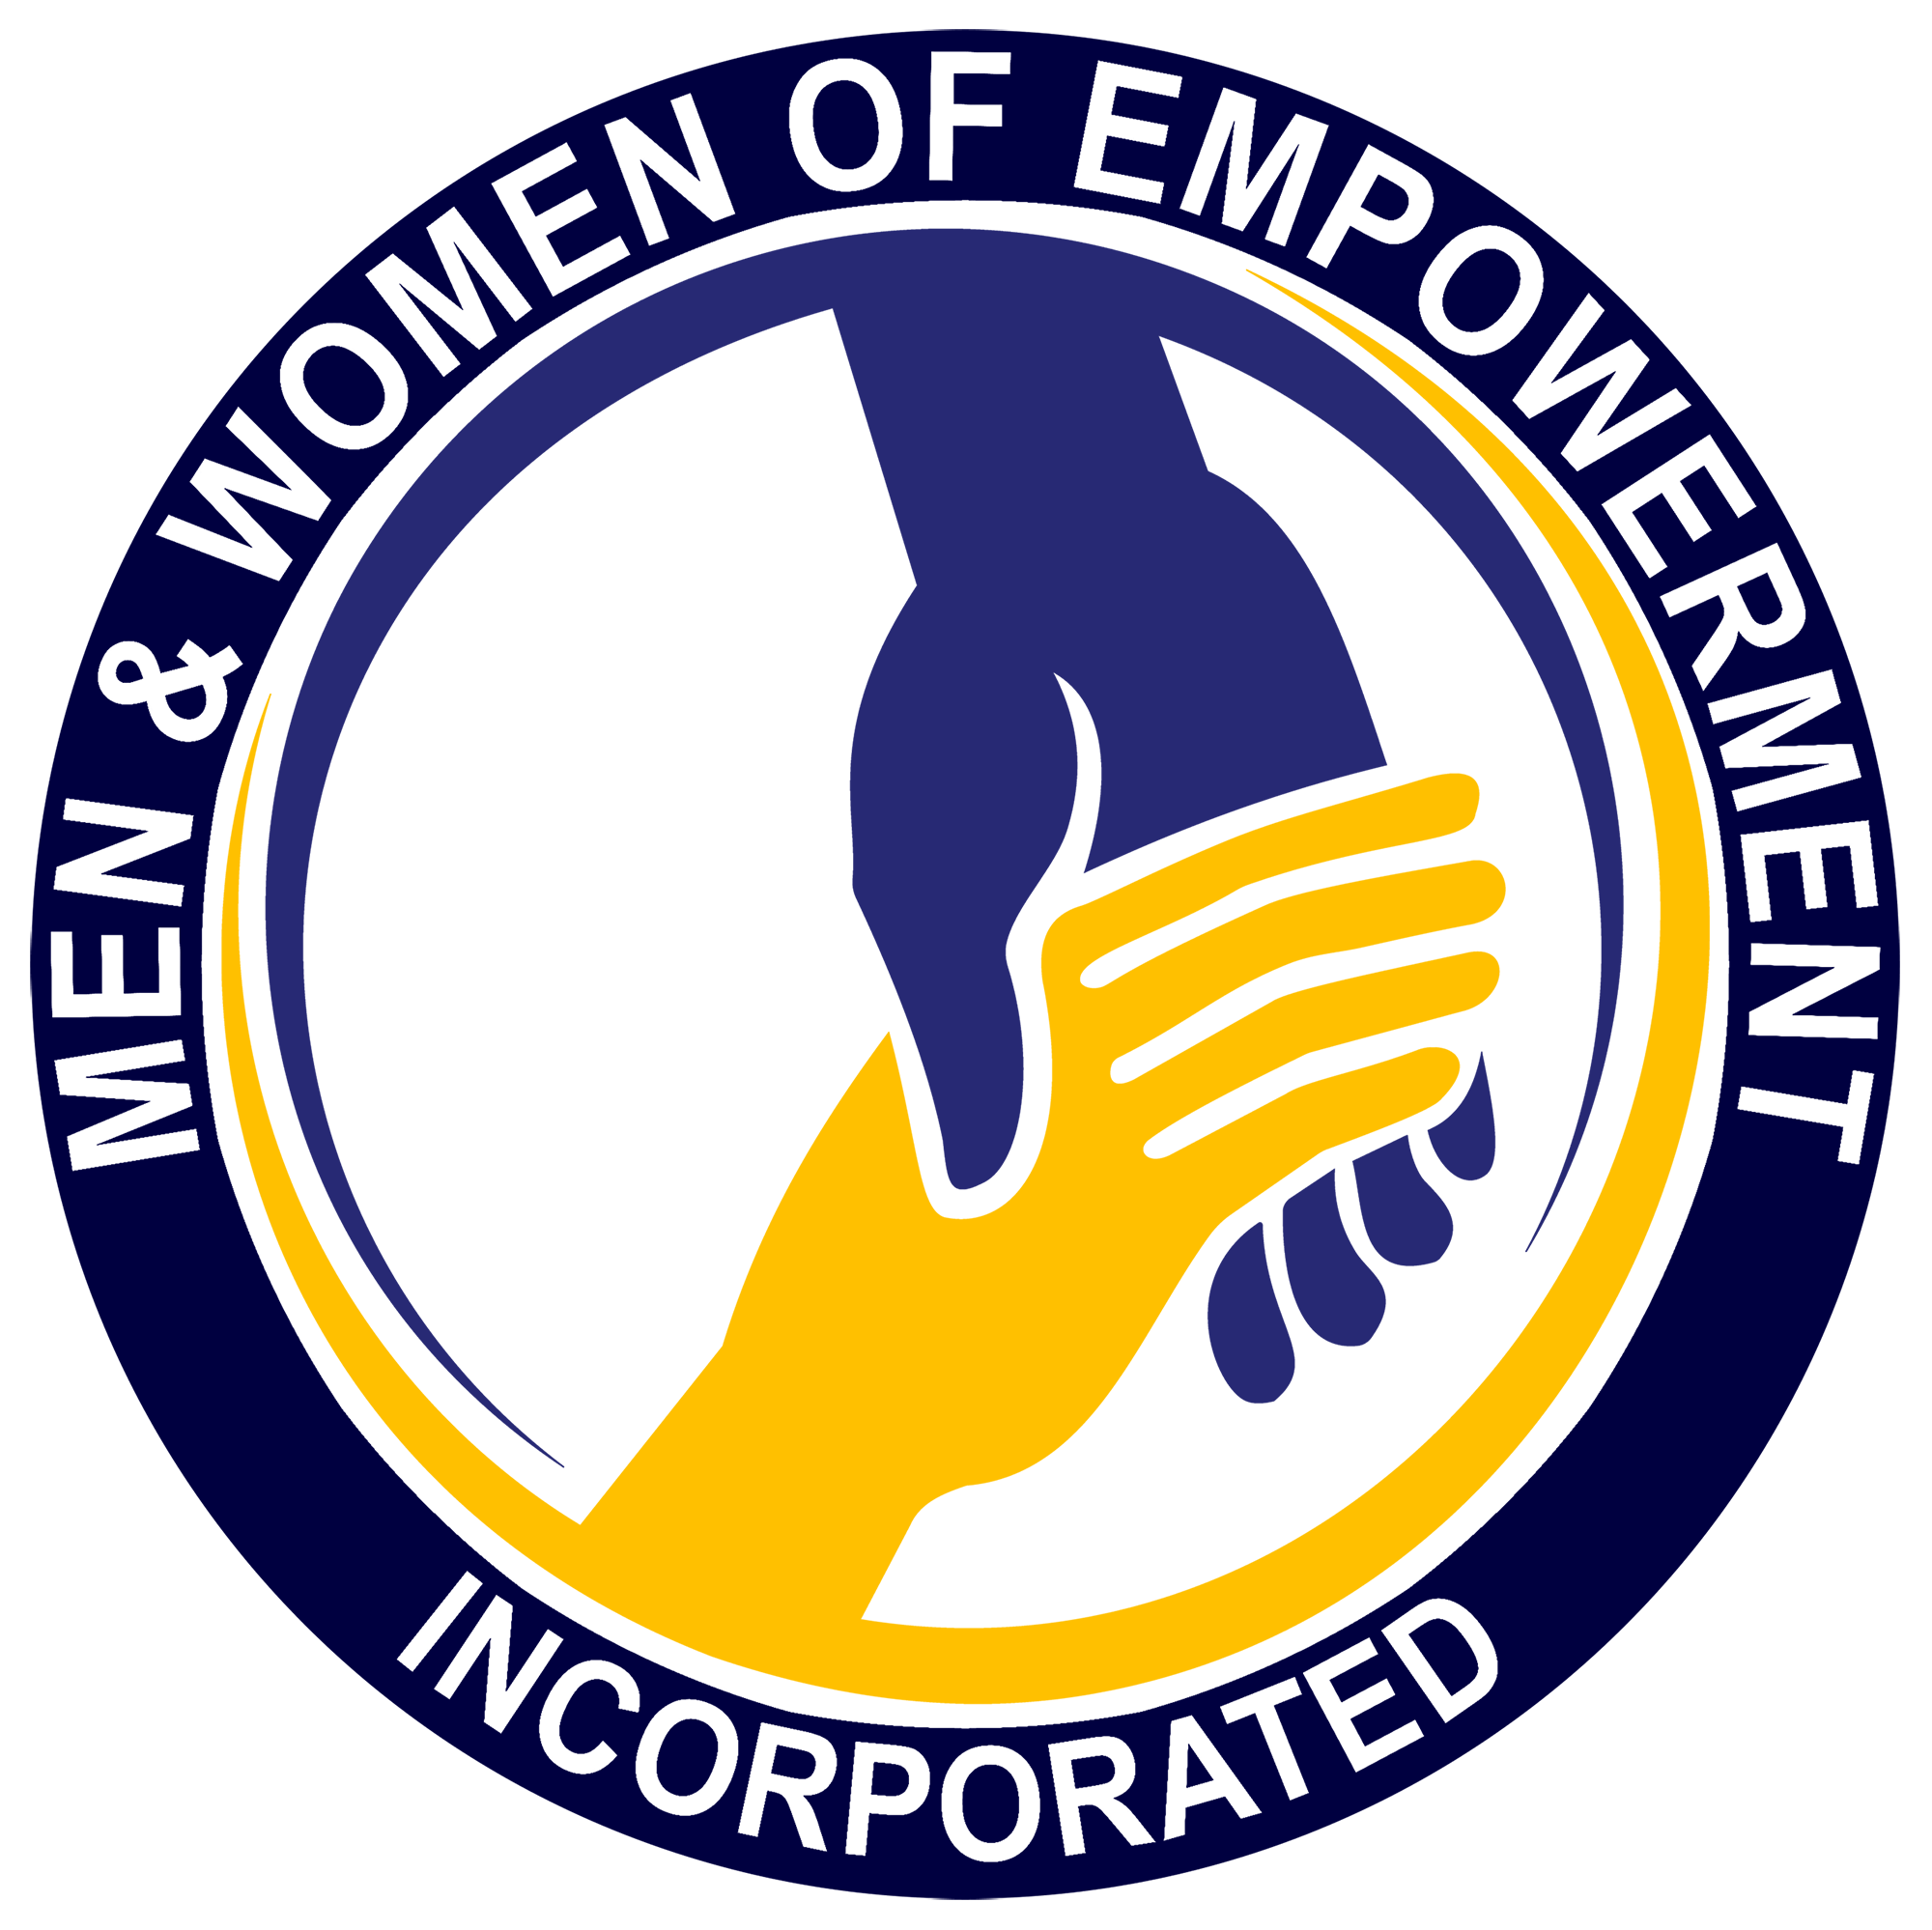 Men and Women of Empowerment